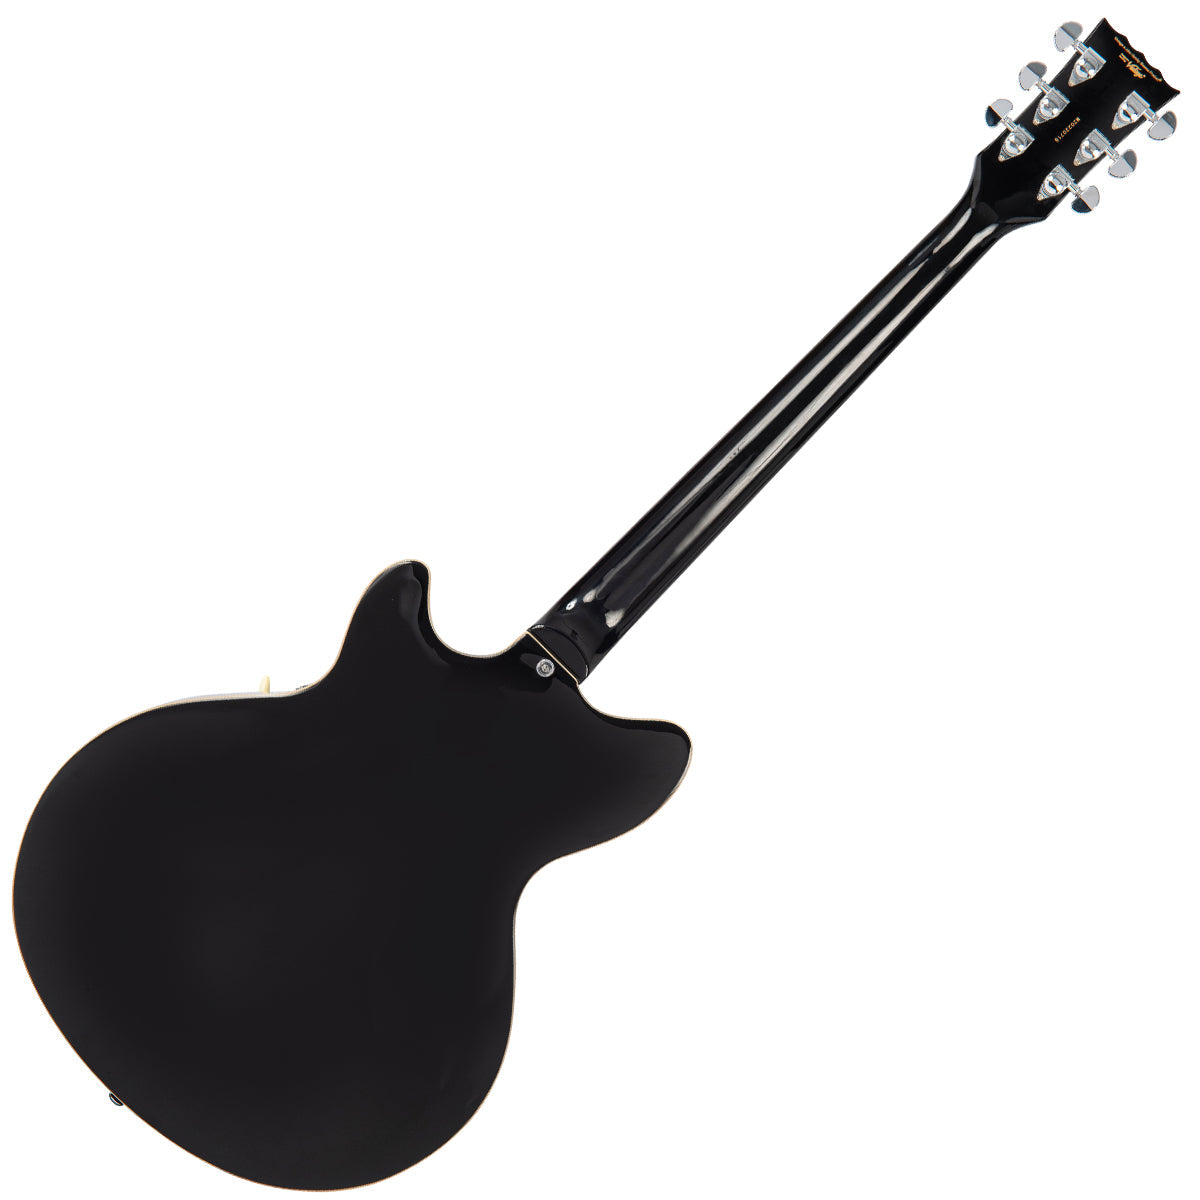 Vintage REVO Series 'Custom Supreme Baritone VI' Semi-Acoustic Guitar ~ Boulevard Black, Electric Guitars for sale at Richards Guitars.